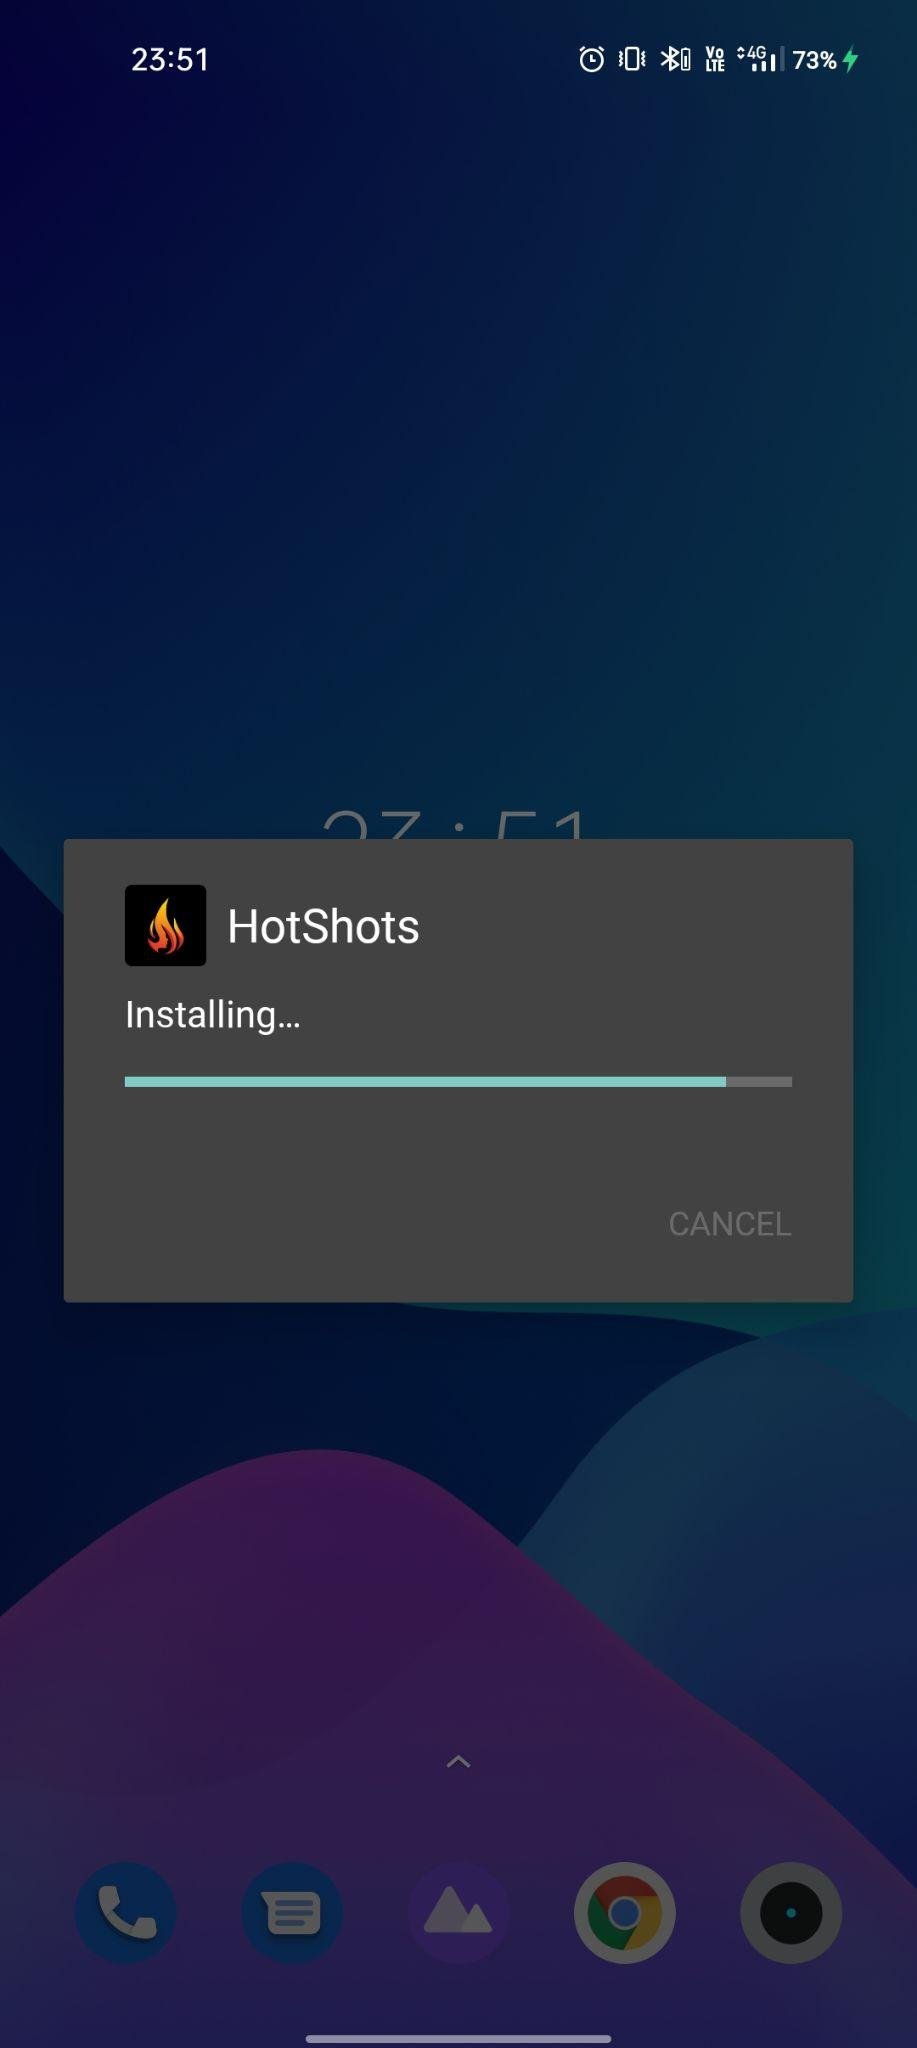 hotshots apk installing